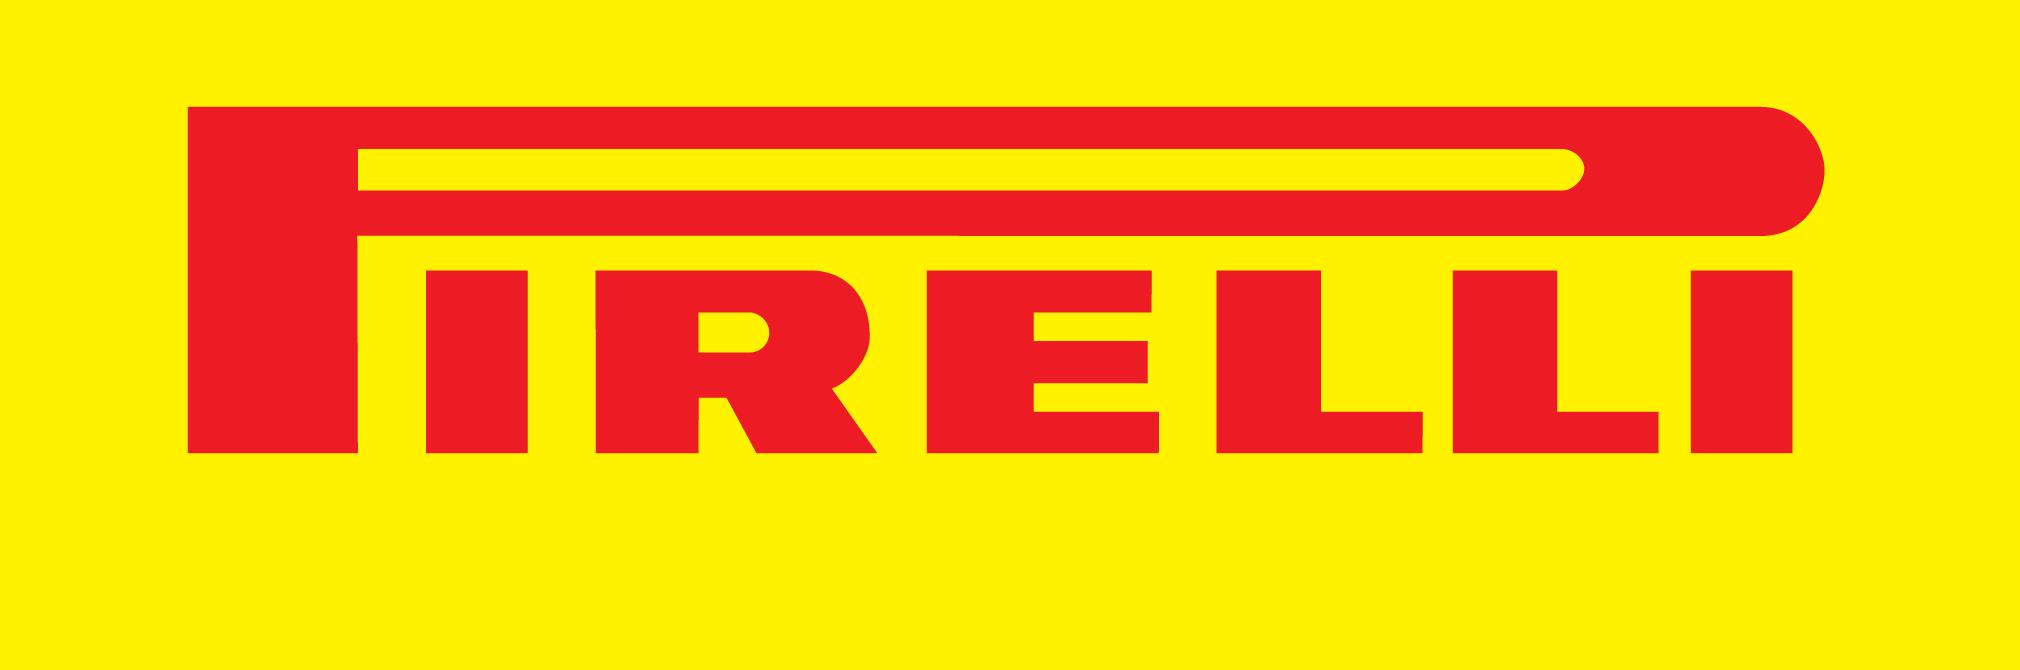 pirelli logo 2 - Pirelli Logo